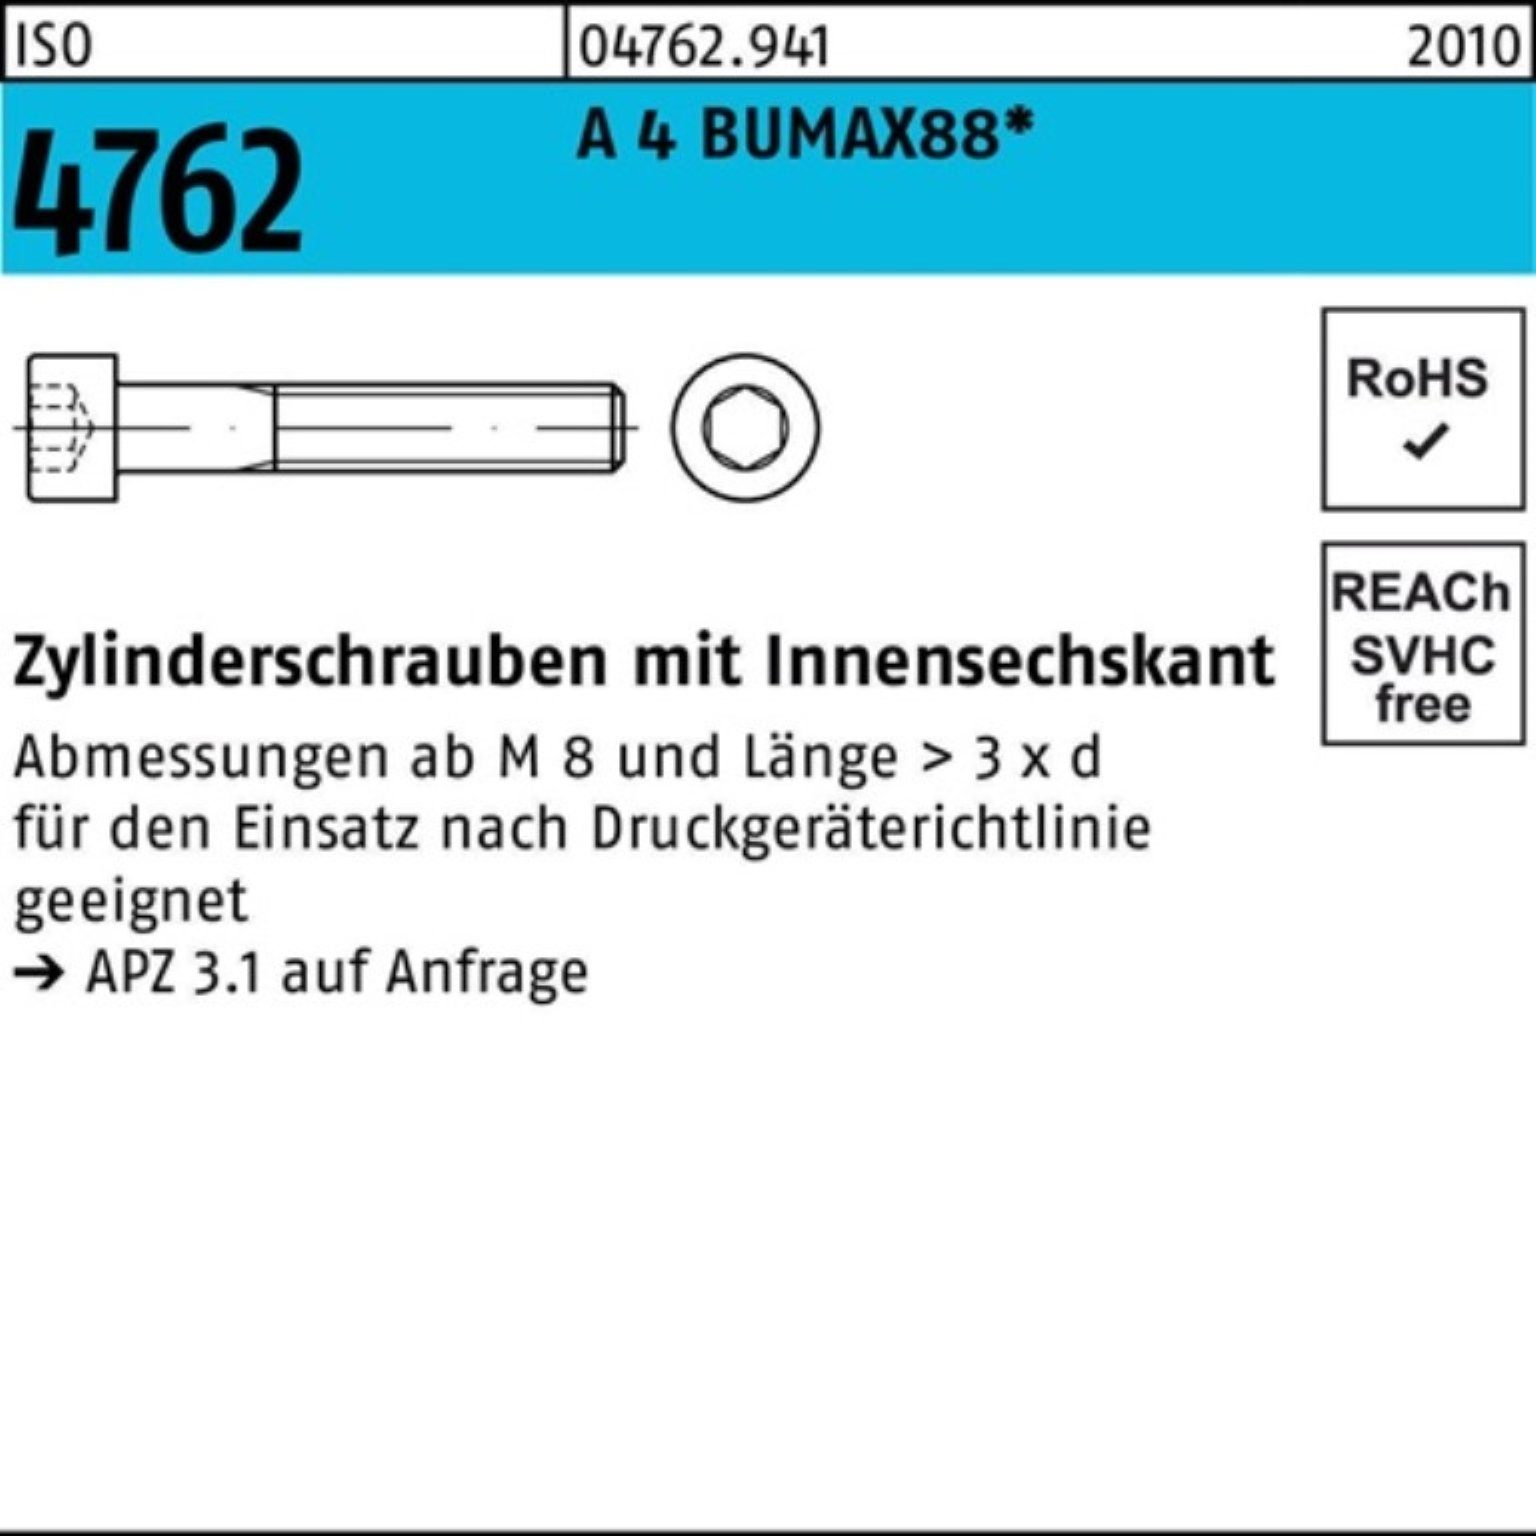 ISO Zylinderschraube Pack 50 25 Zylinderschraube 100er 4 BUMAX88 4762 A Innen-6kt M12x Bufab